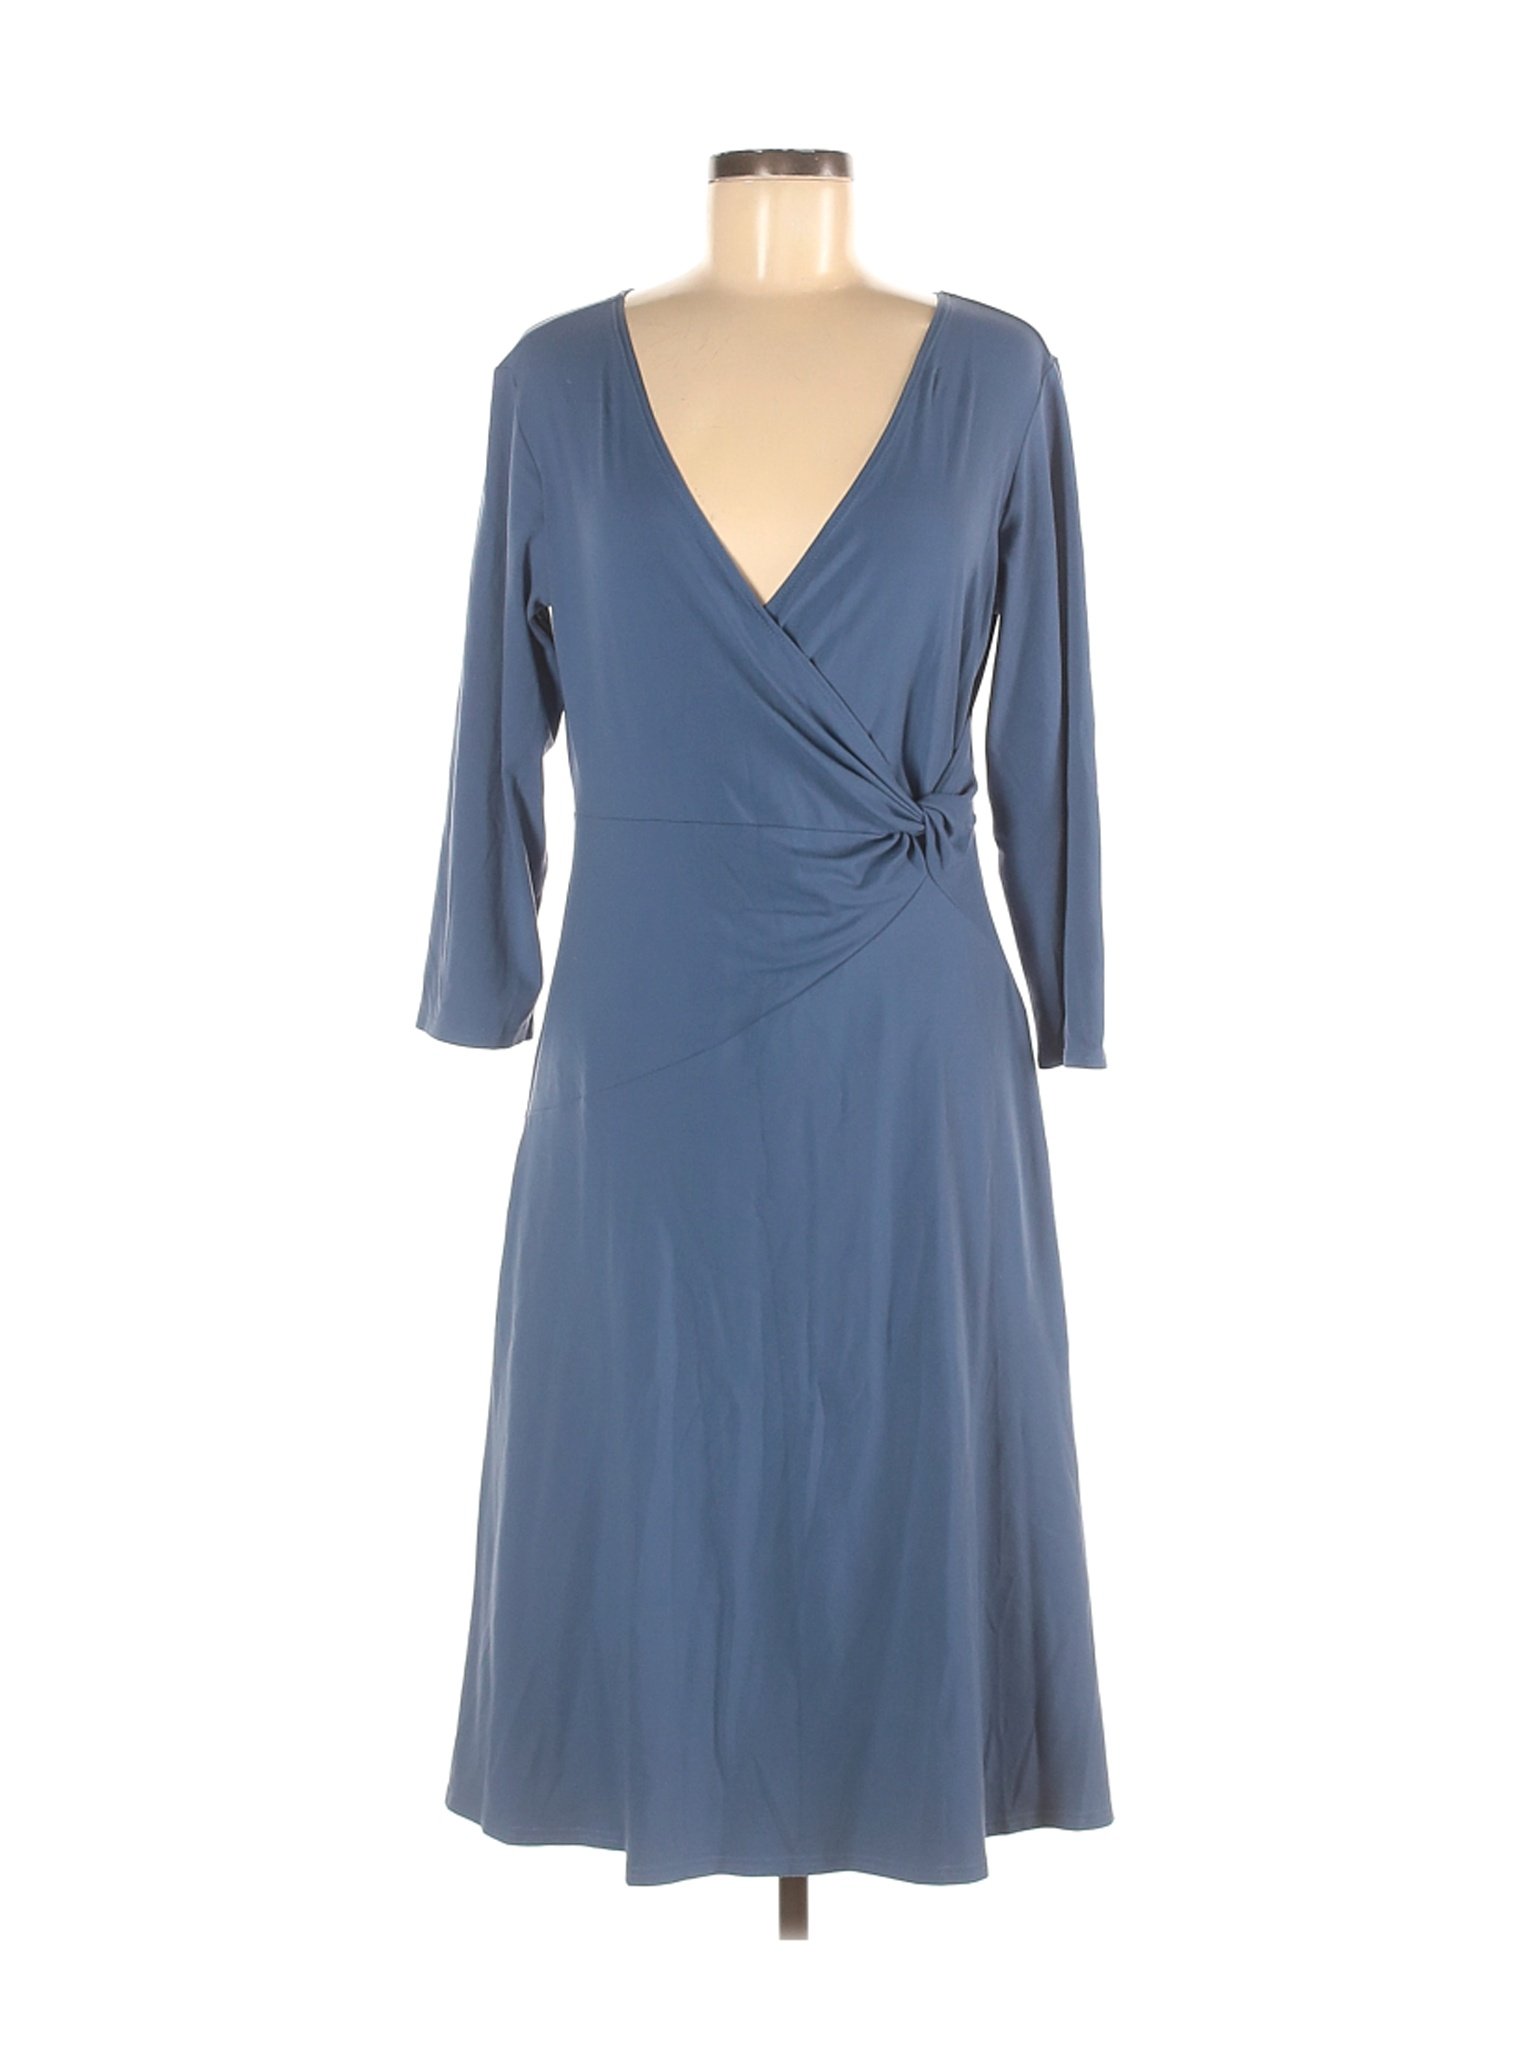 Travelsmith Women Blue Casual Dress M | eBay